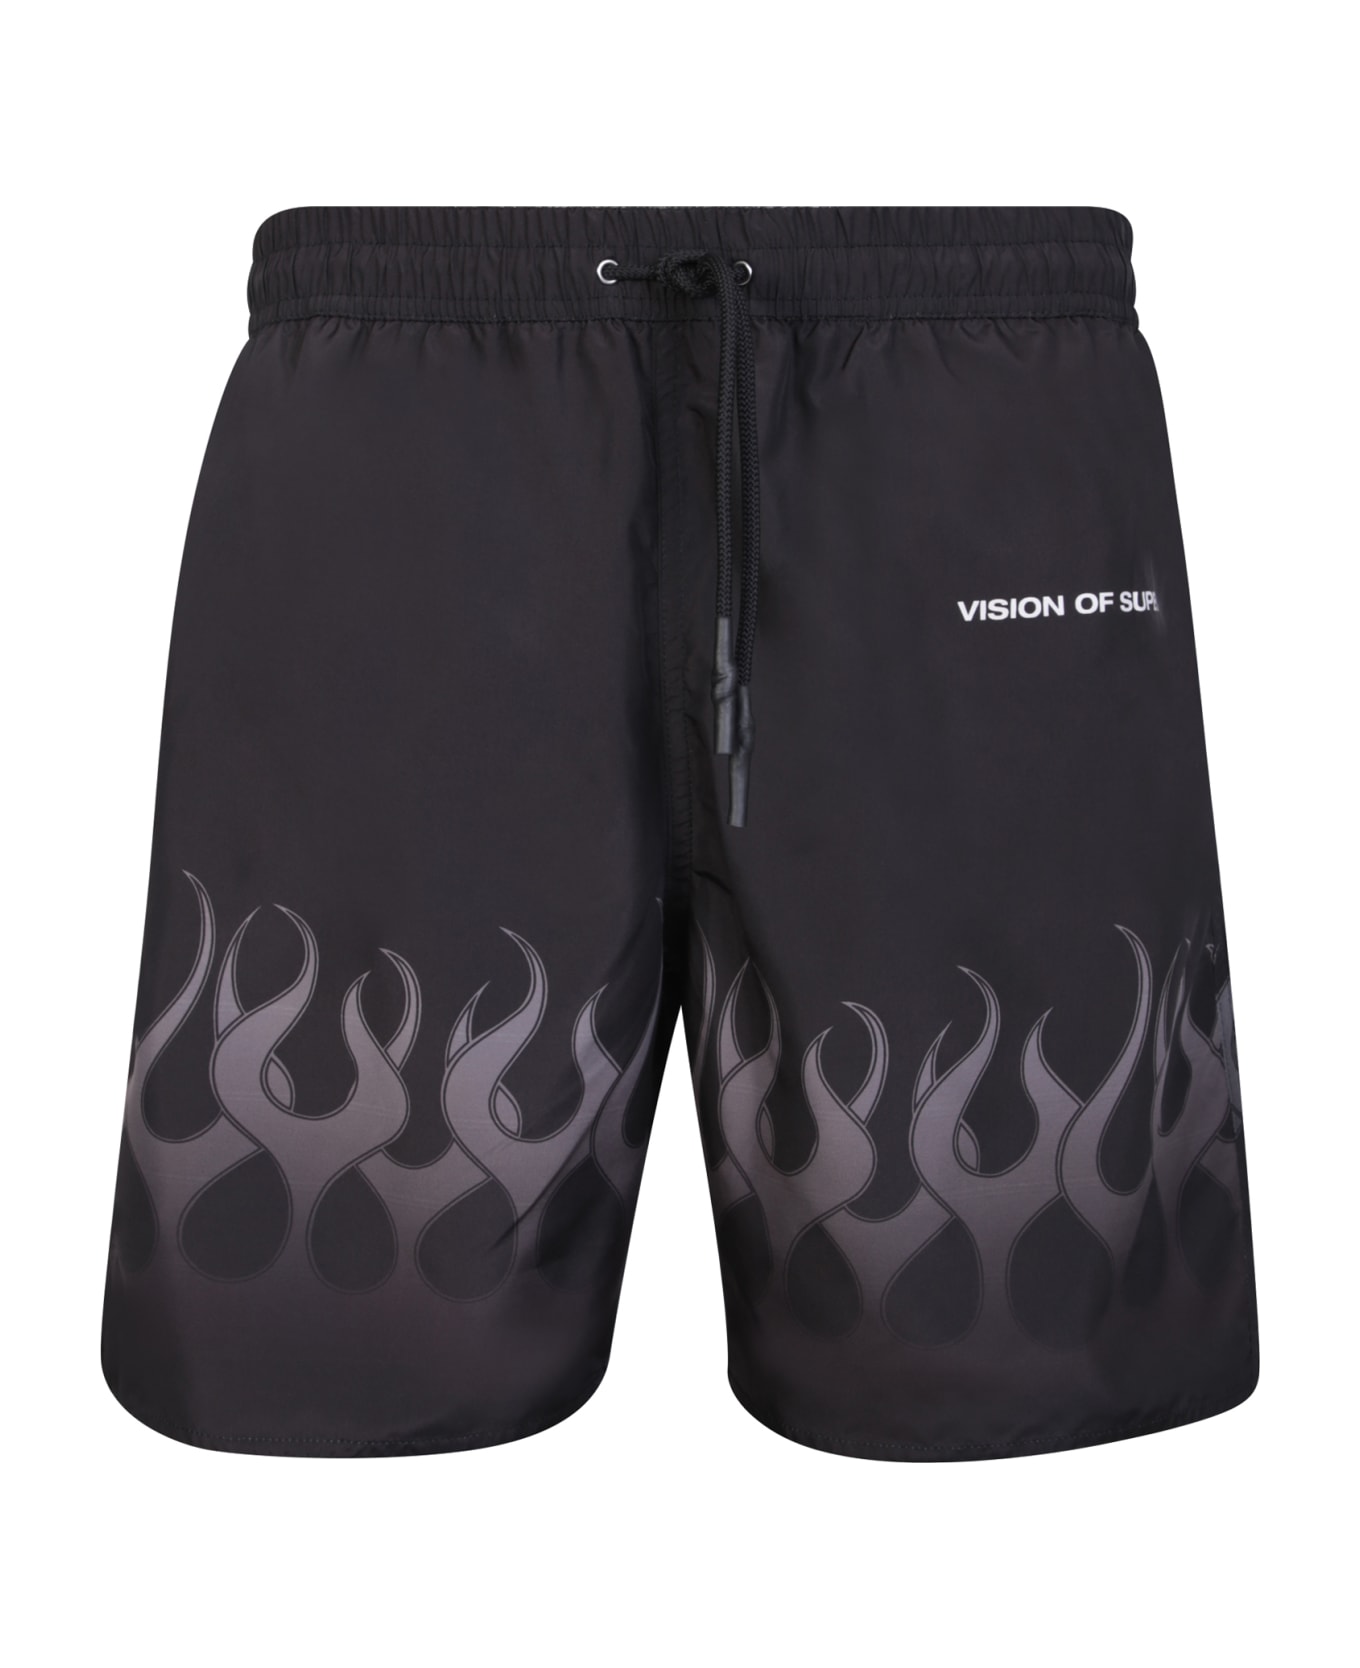 Vision of Super Black/gray Flames Swim Shorts - Black